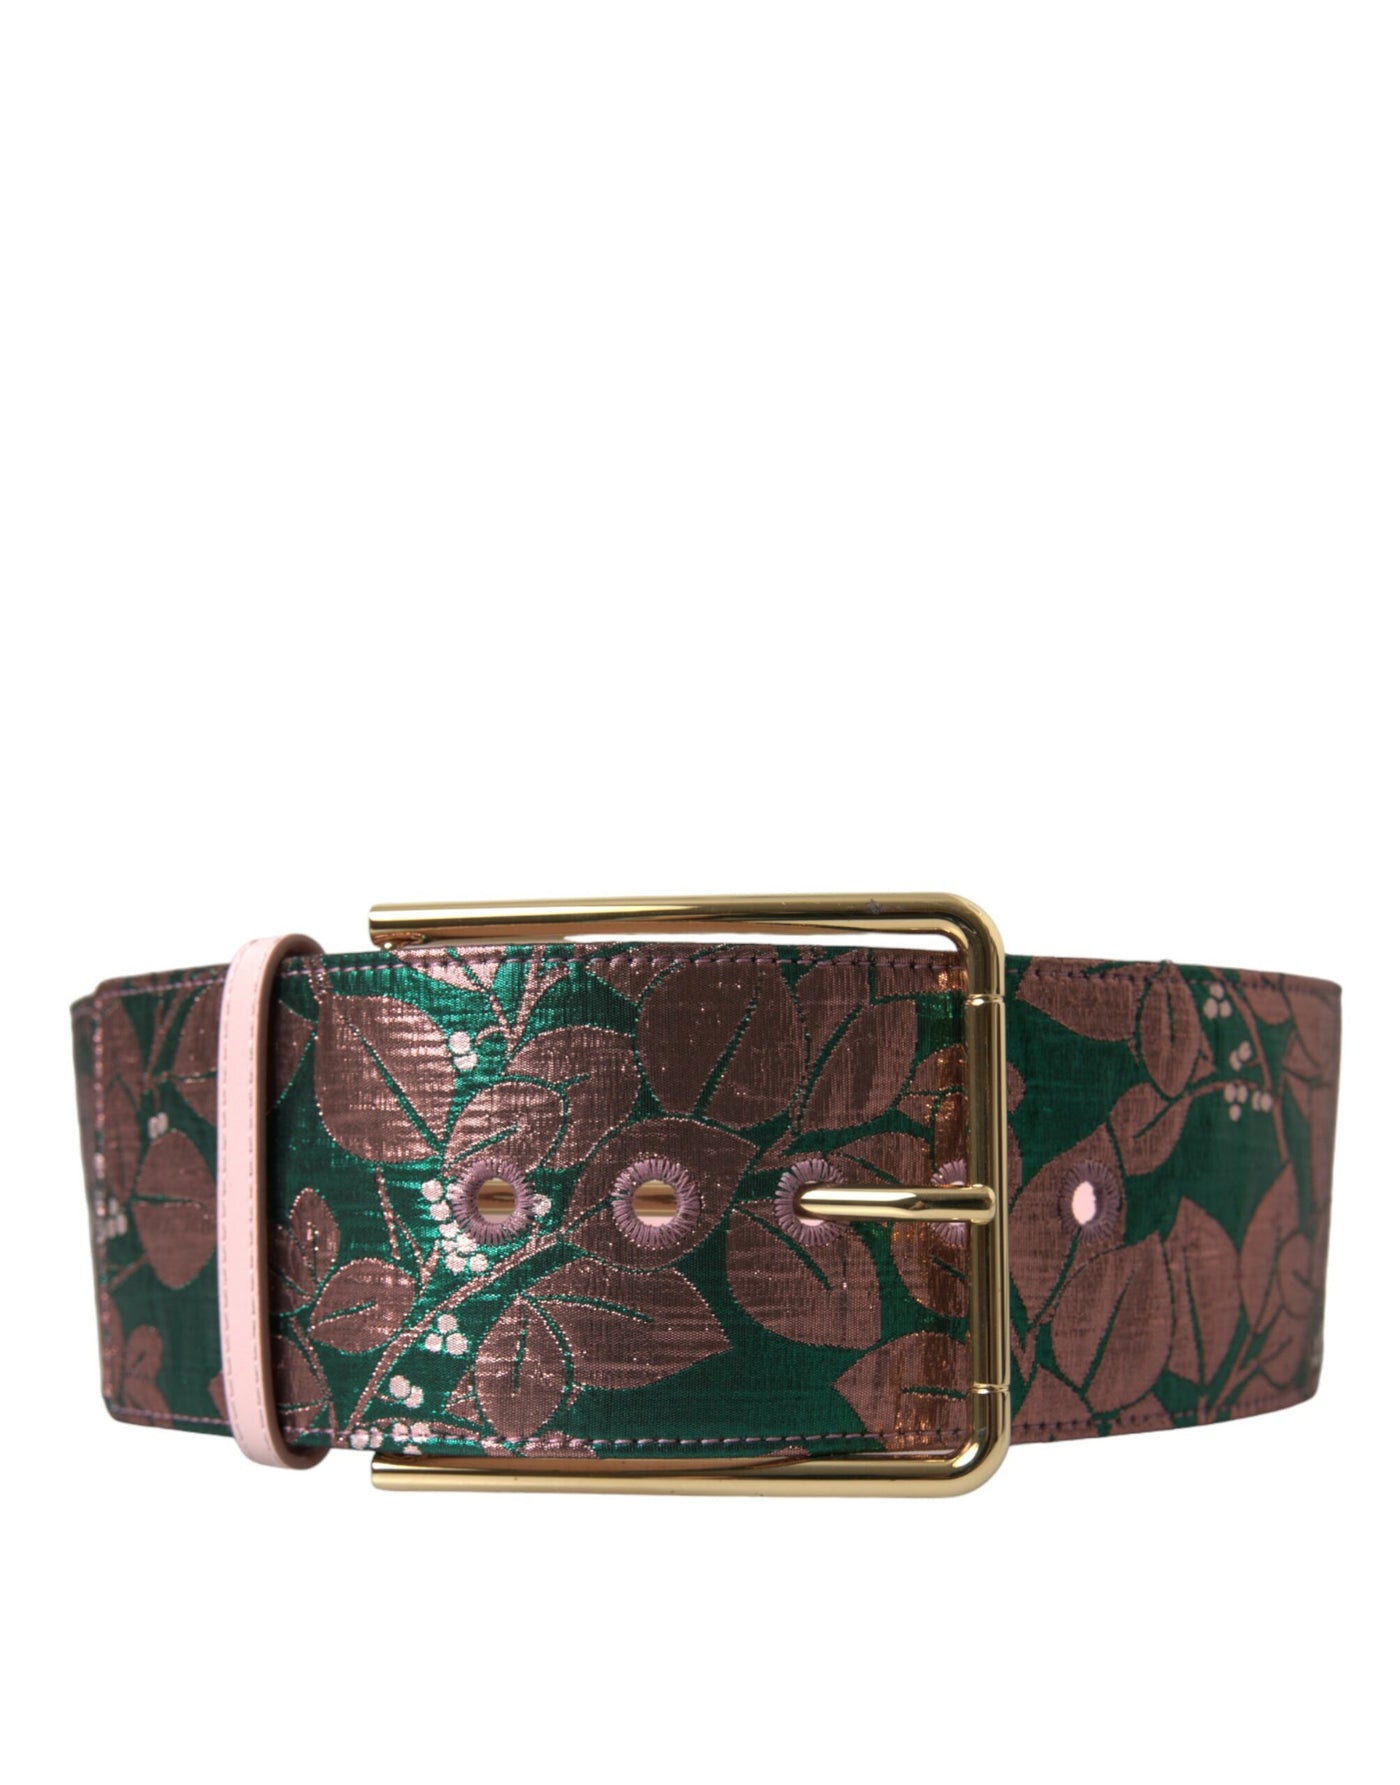 Dolce & Gabbana Multicolor Floral Jacquard Lurex Gold Buckle Belt